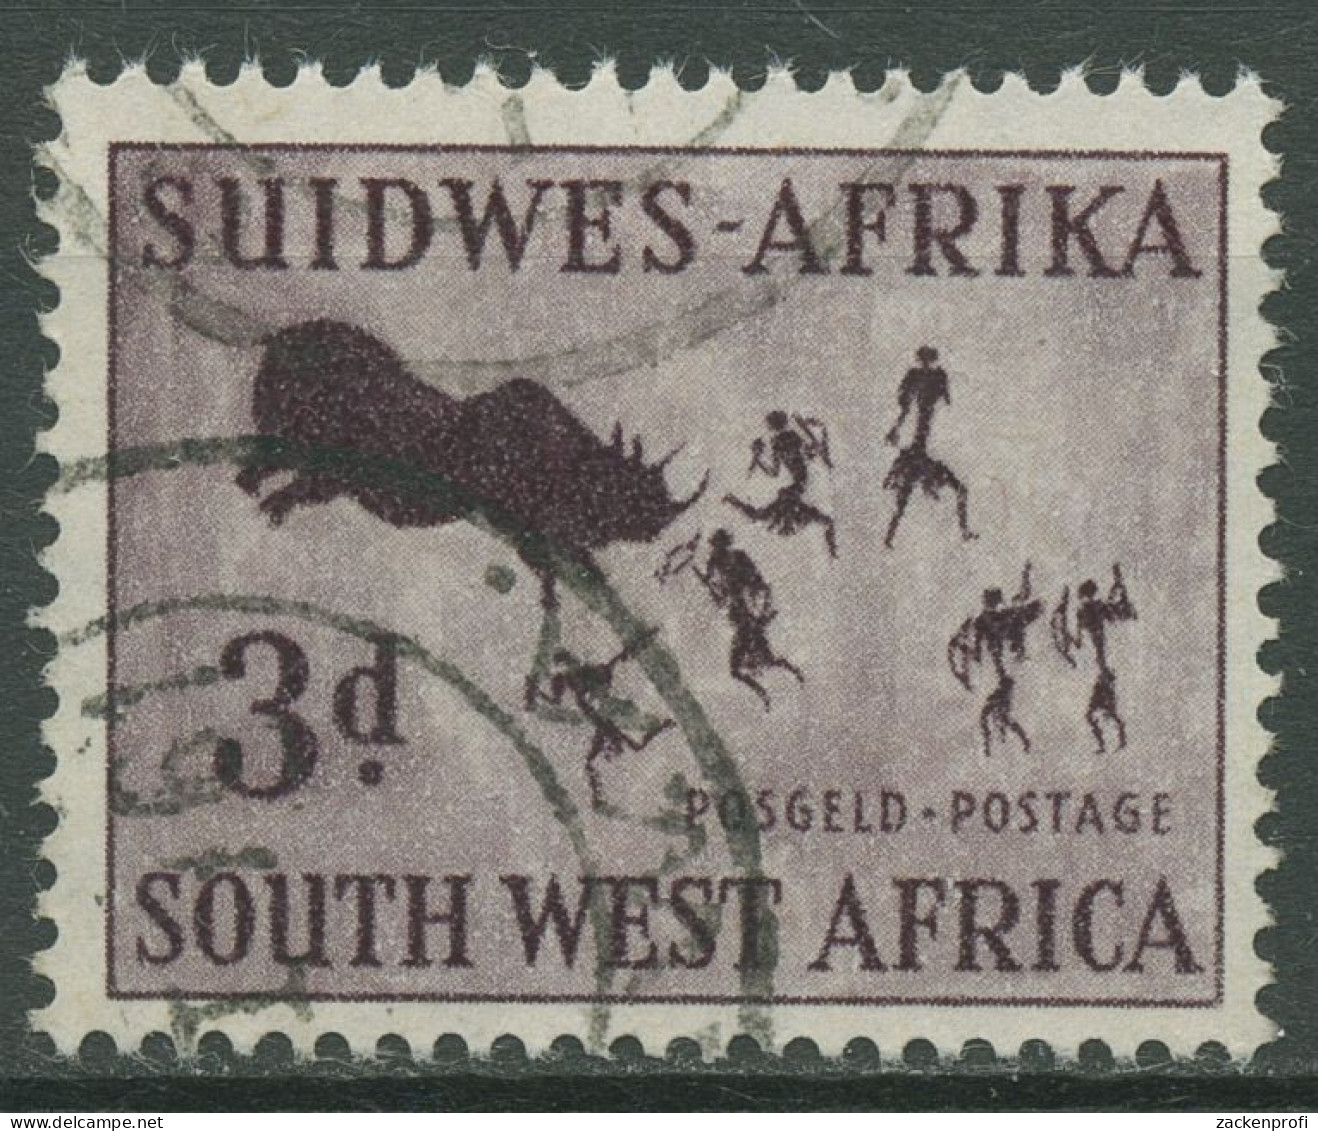 Südwestafrika 1960 Felszeichnung Nashornjagd 293 Gestempelt - África Del Sudoeste (1923-1990)